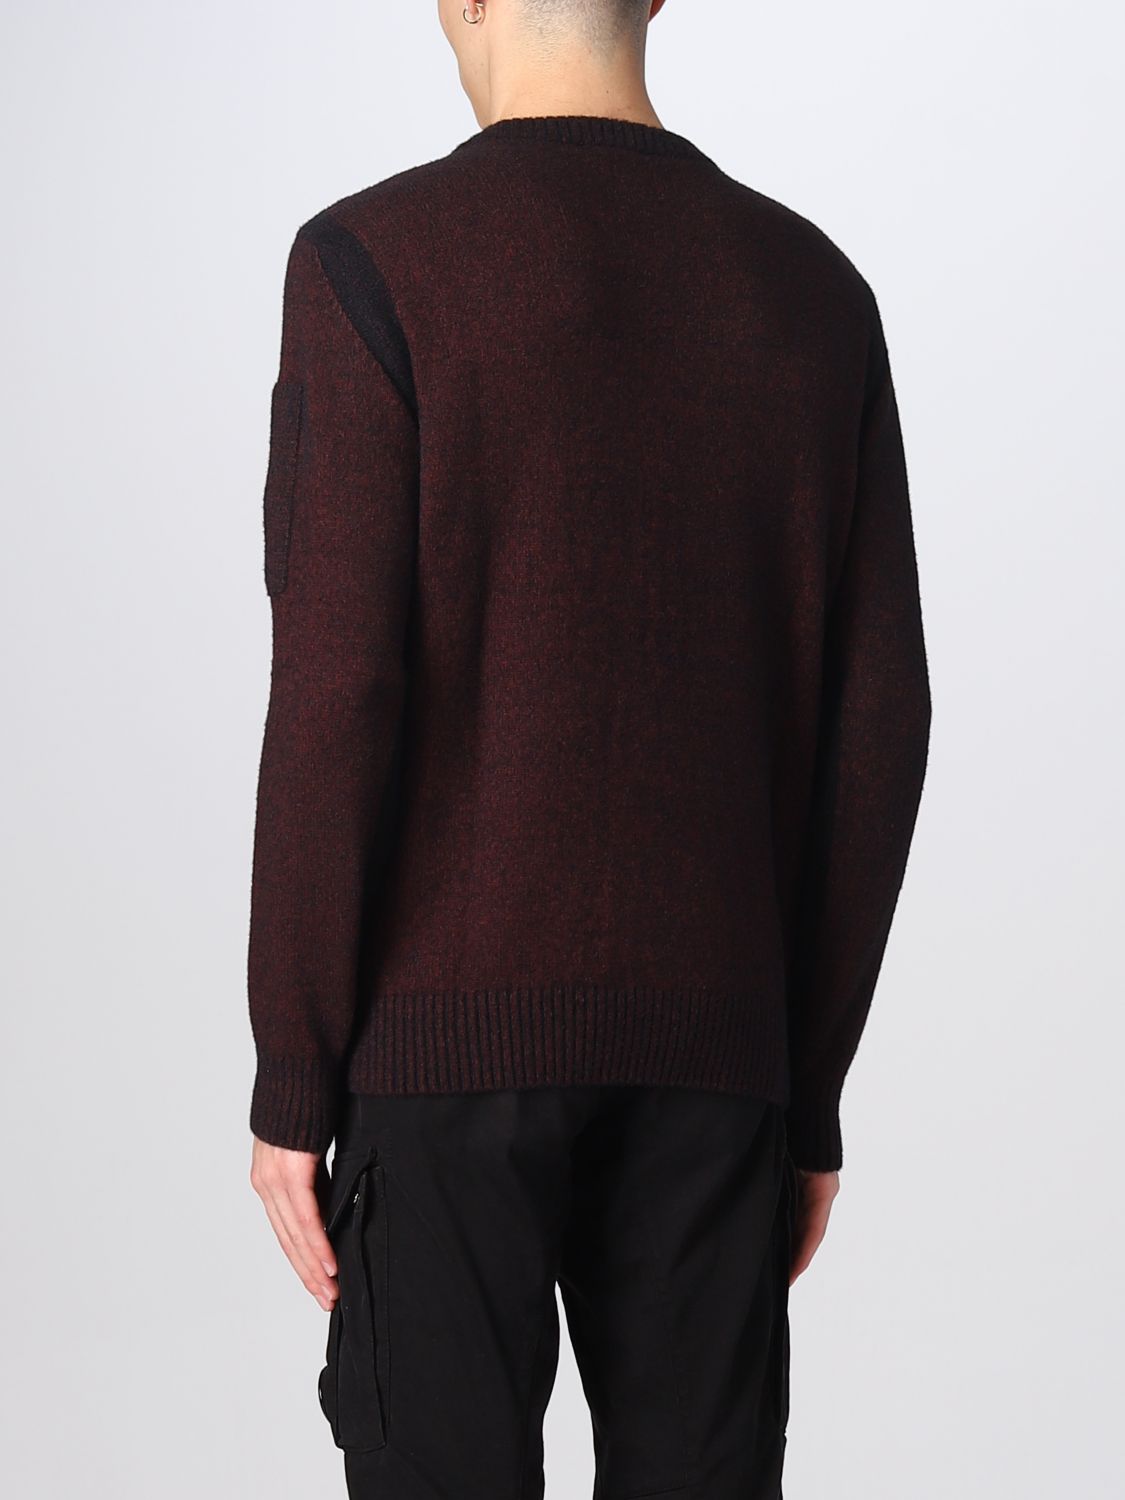 C.P. COMPANY: sweater for man - Burgundy | C.p. Company sweater ...